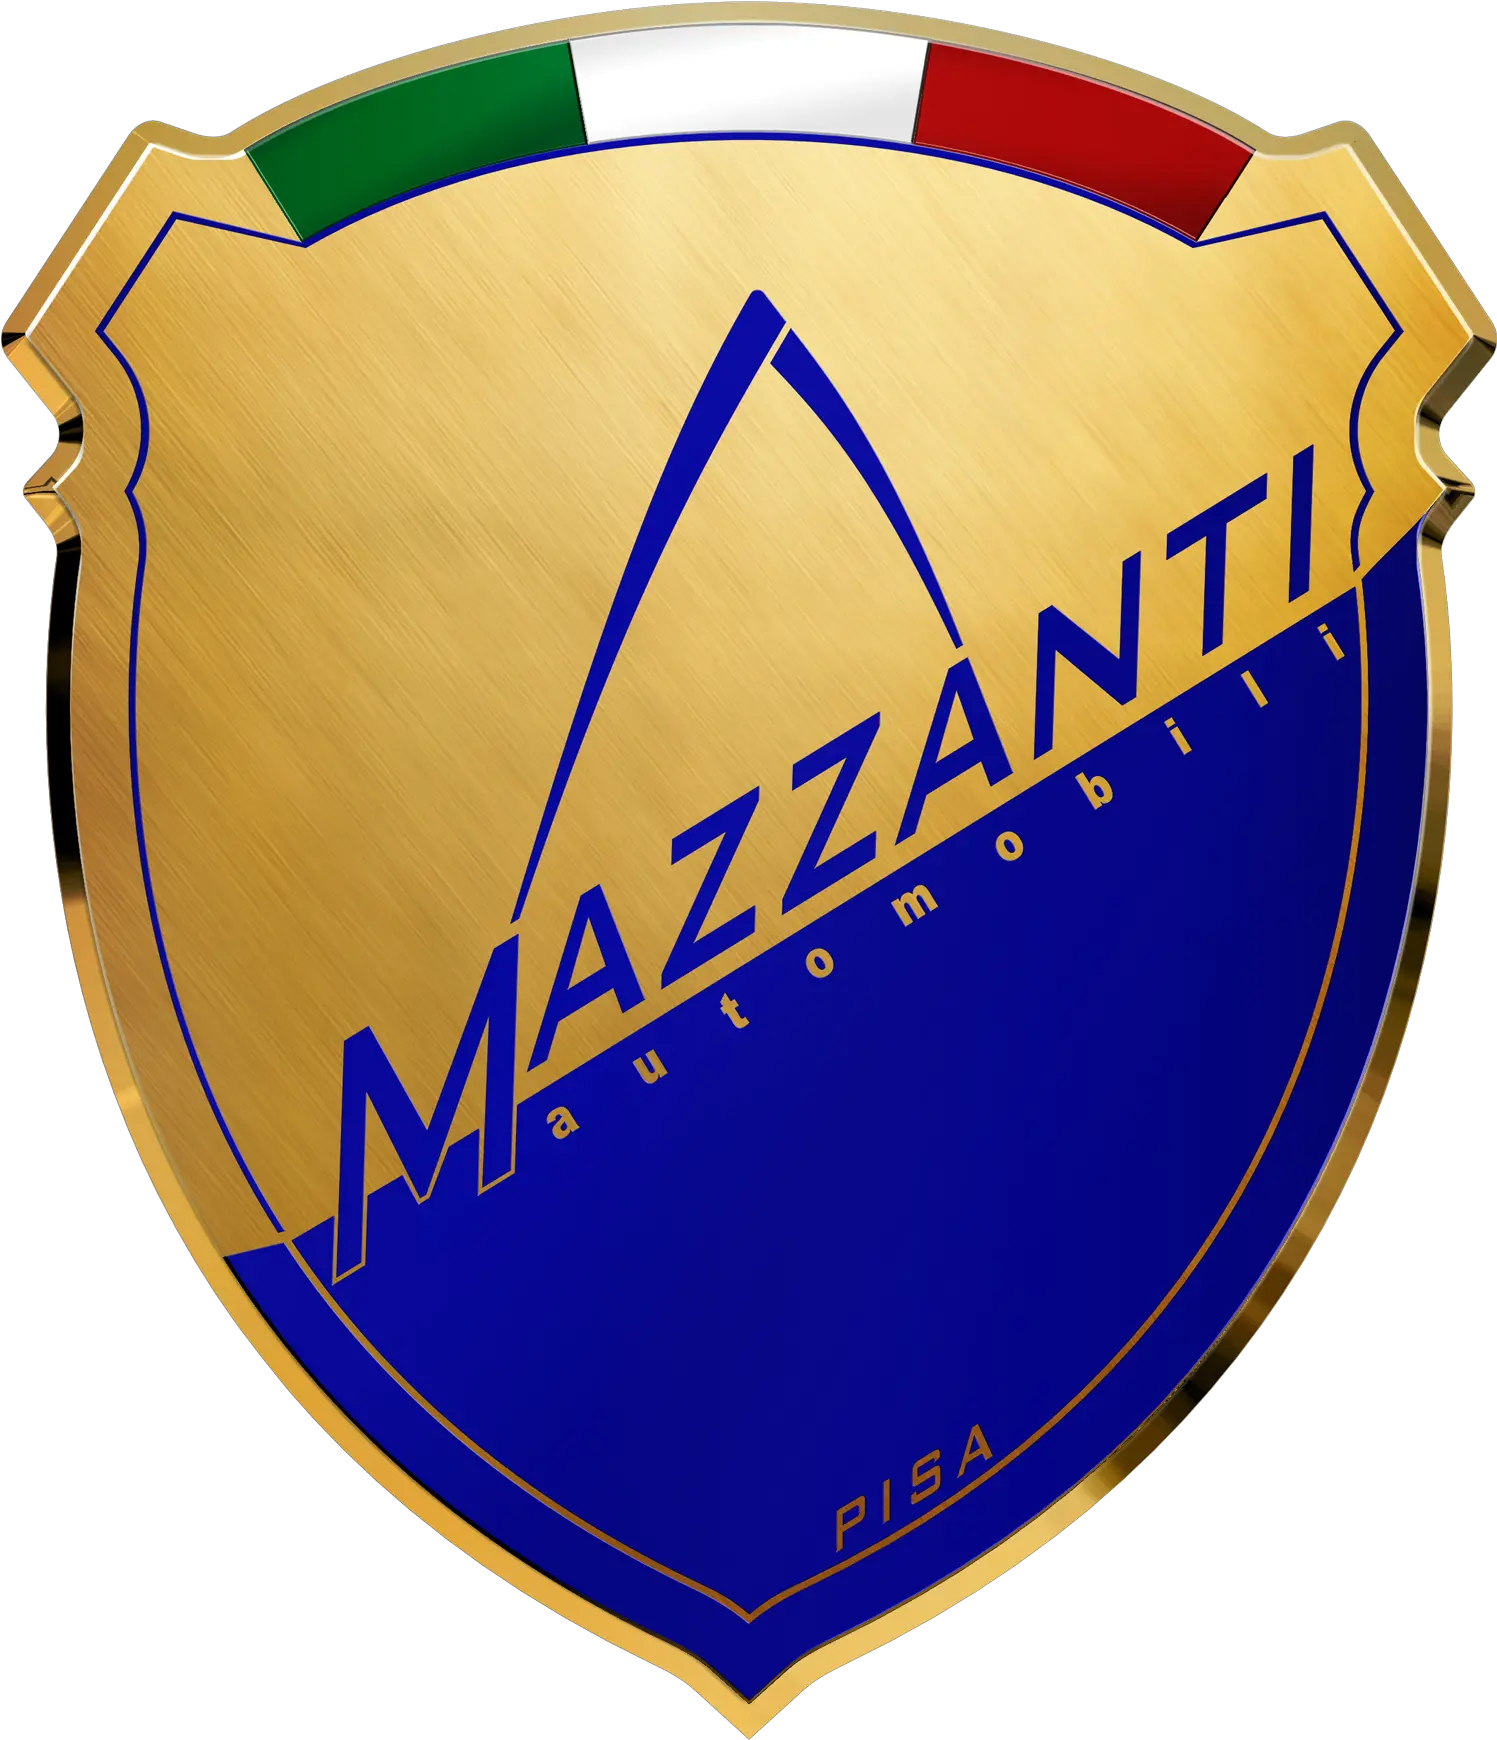 Mazzanti Automobili Logo Hd Png Information Carlogosorg Mazzanti Automobili Logo Ferrari Logo Image